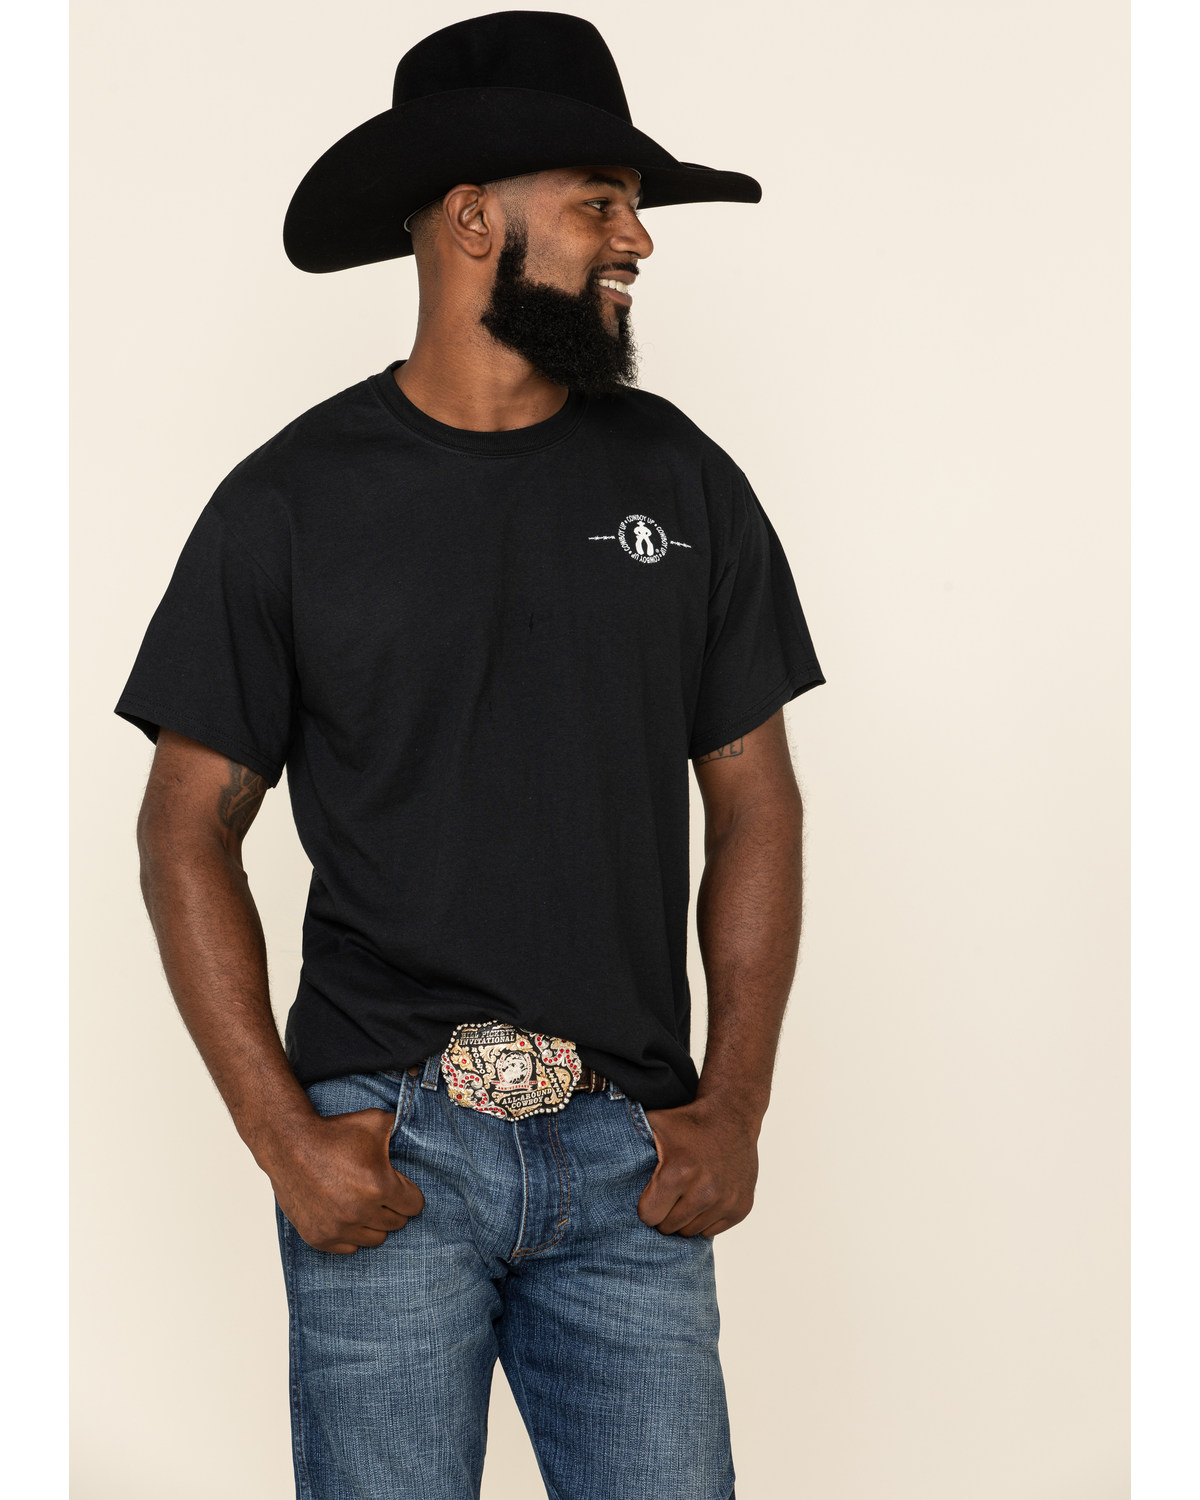 Cowboy Up Men's Team Roper Short Sleeve Graphic T-Shirt